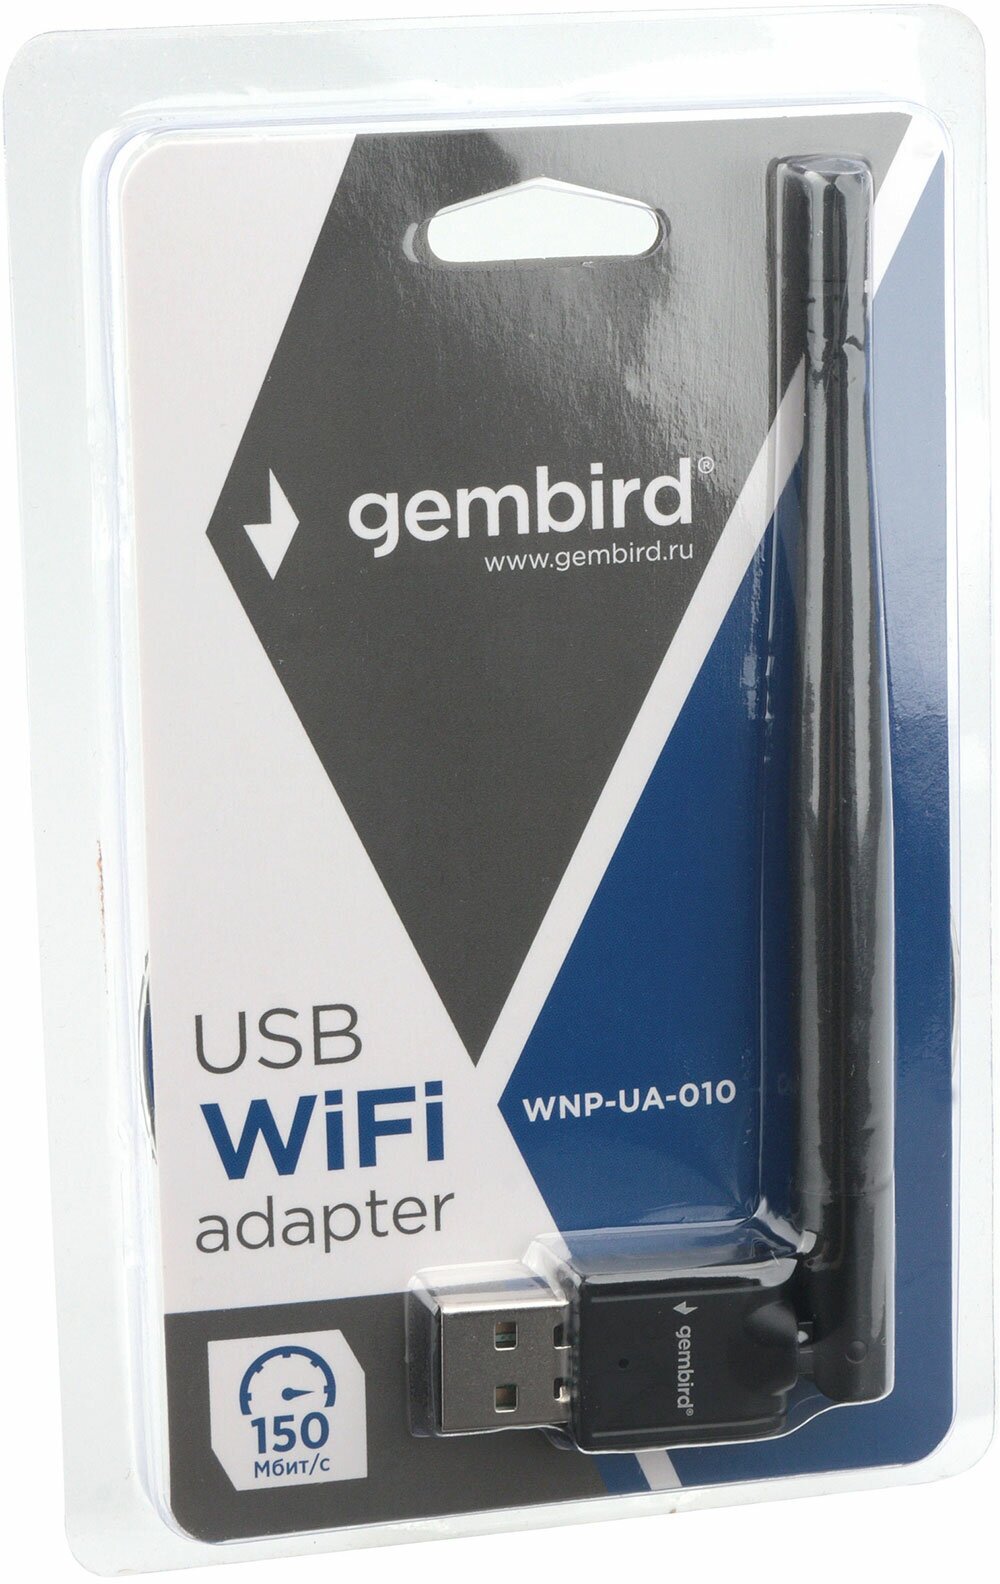 Wi-Fi адаптер Gembird USB 802.11b/g/n WNP-UA-010